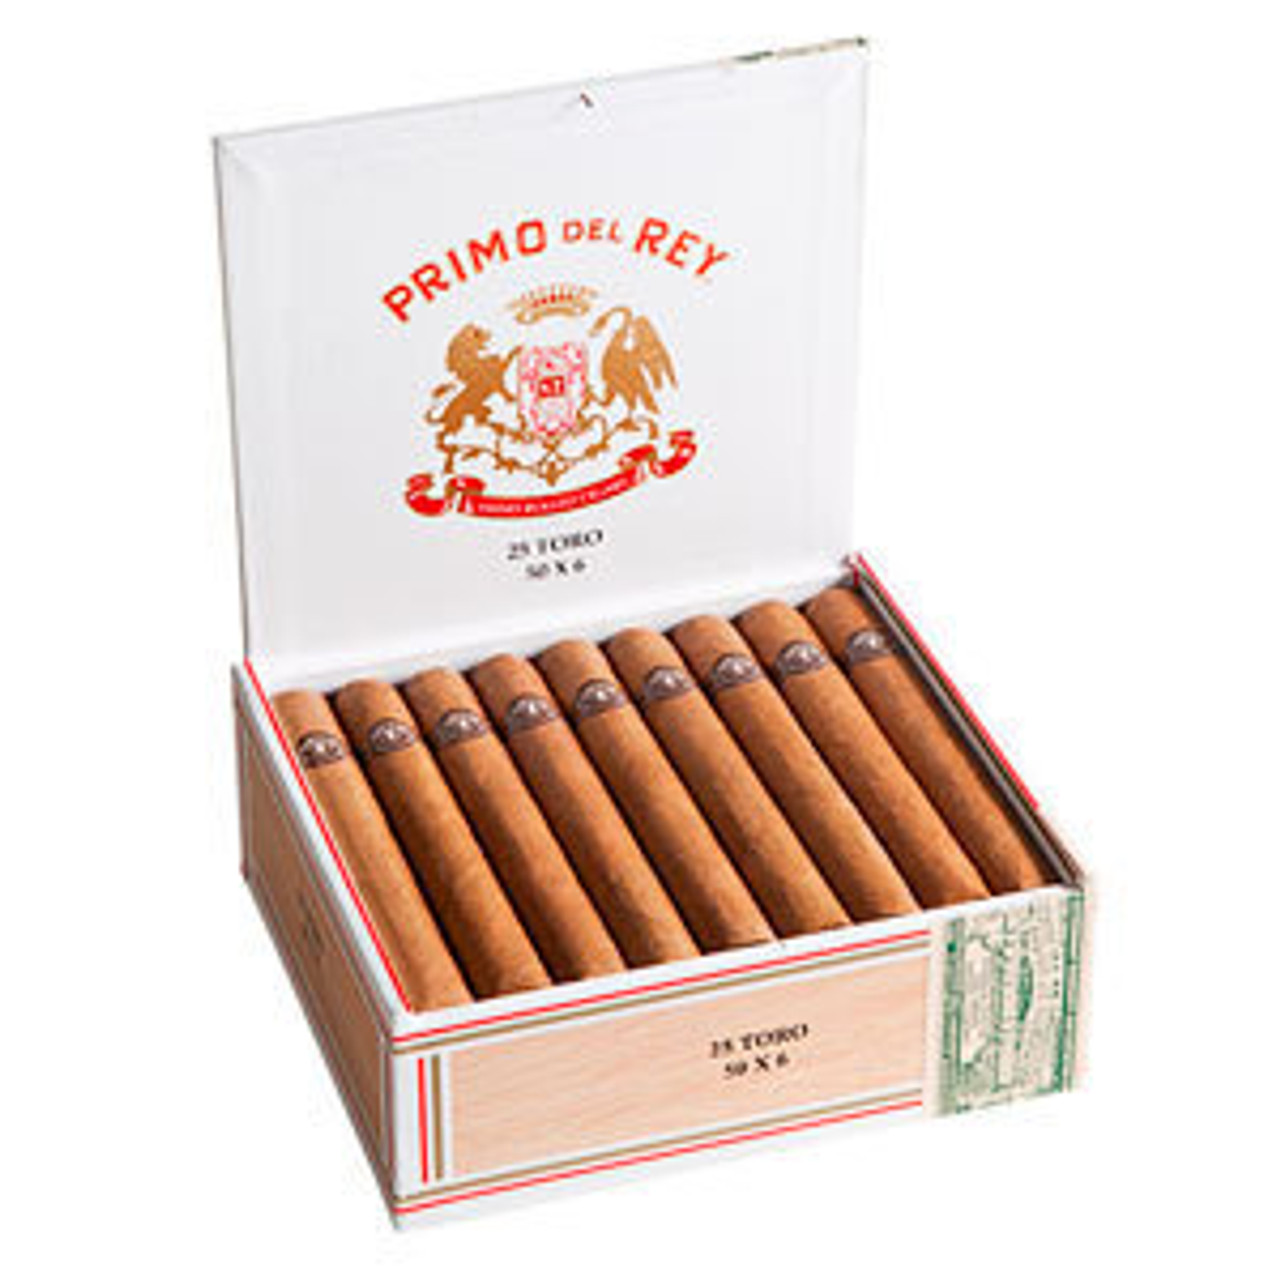 Primo del Rey Robusto Cigars - 5 x 54 (Box of 15) *Box